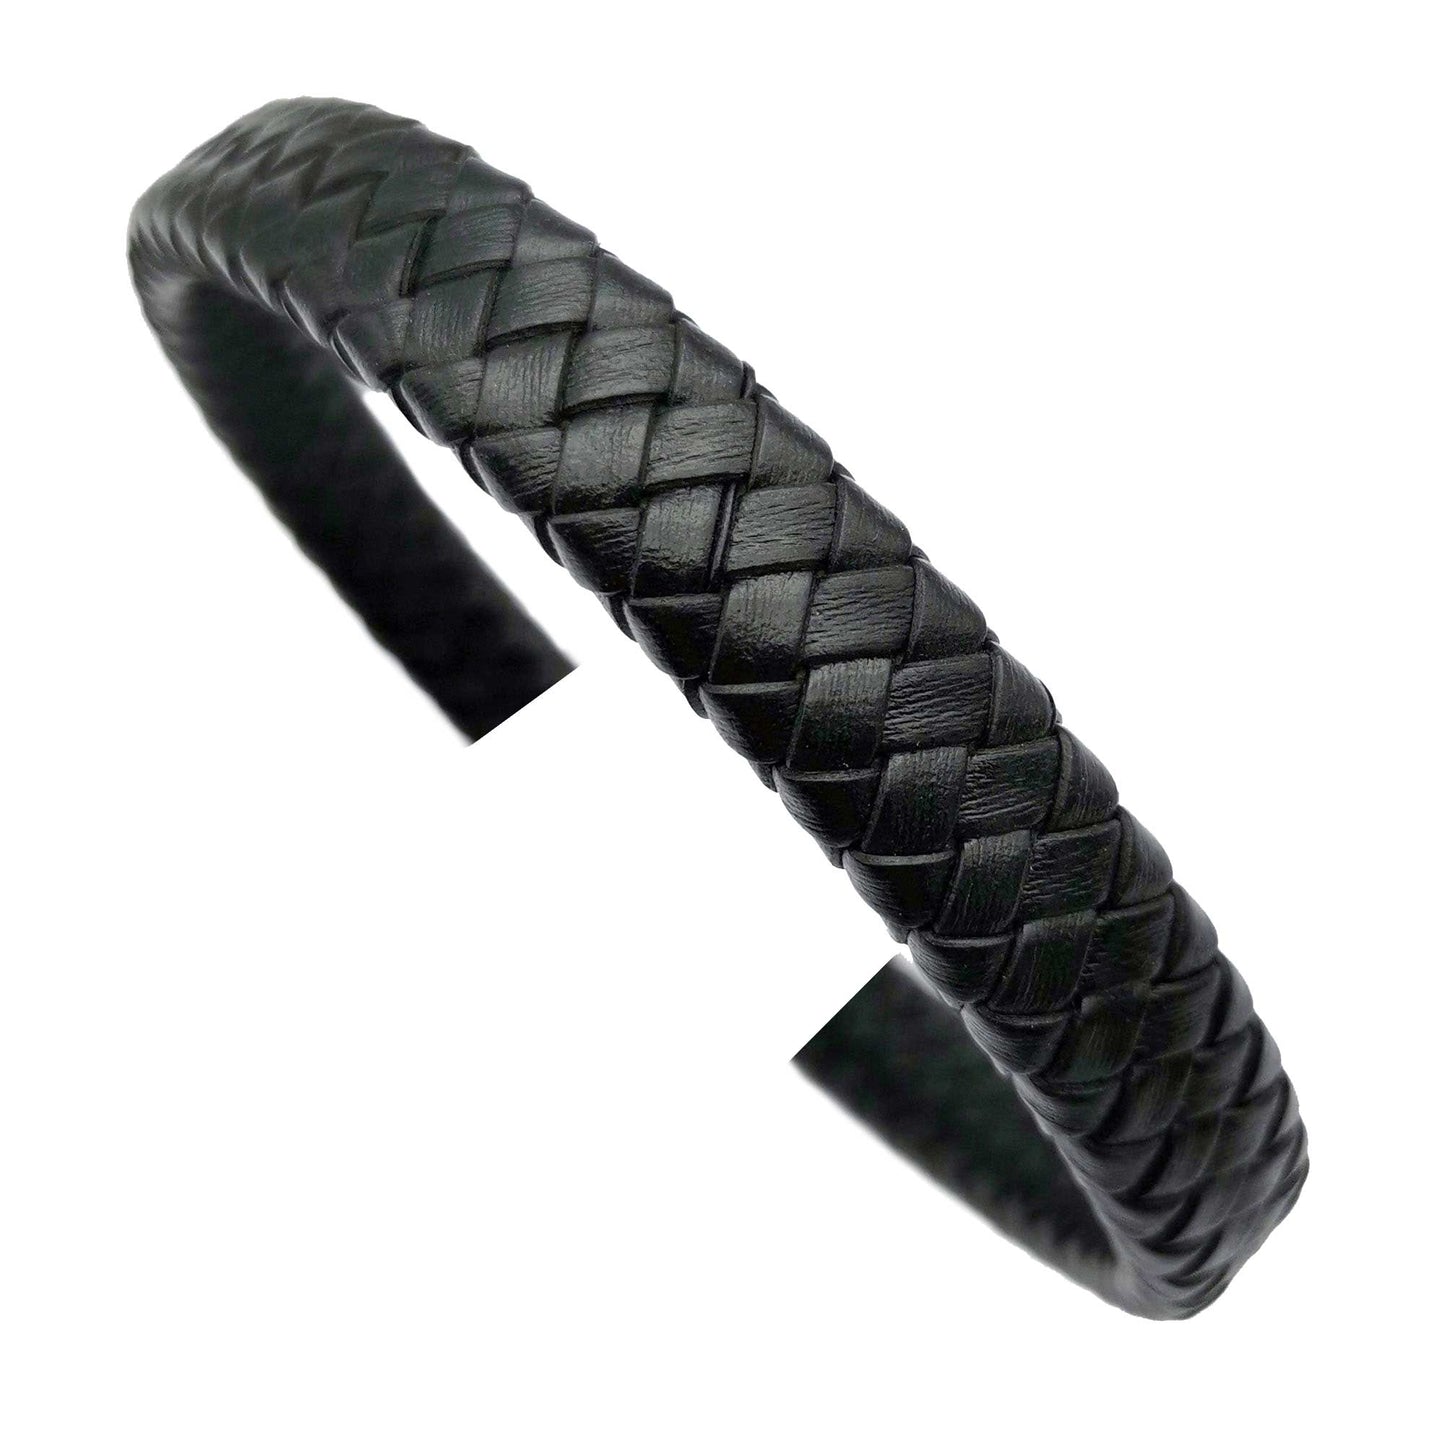 shapesbyX-12x6mm Braided Leather Strap Braid Bracelet Making Leather Cord Black